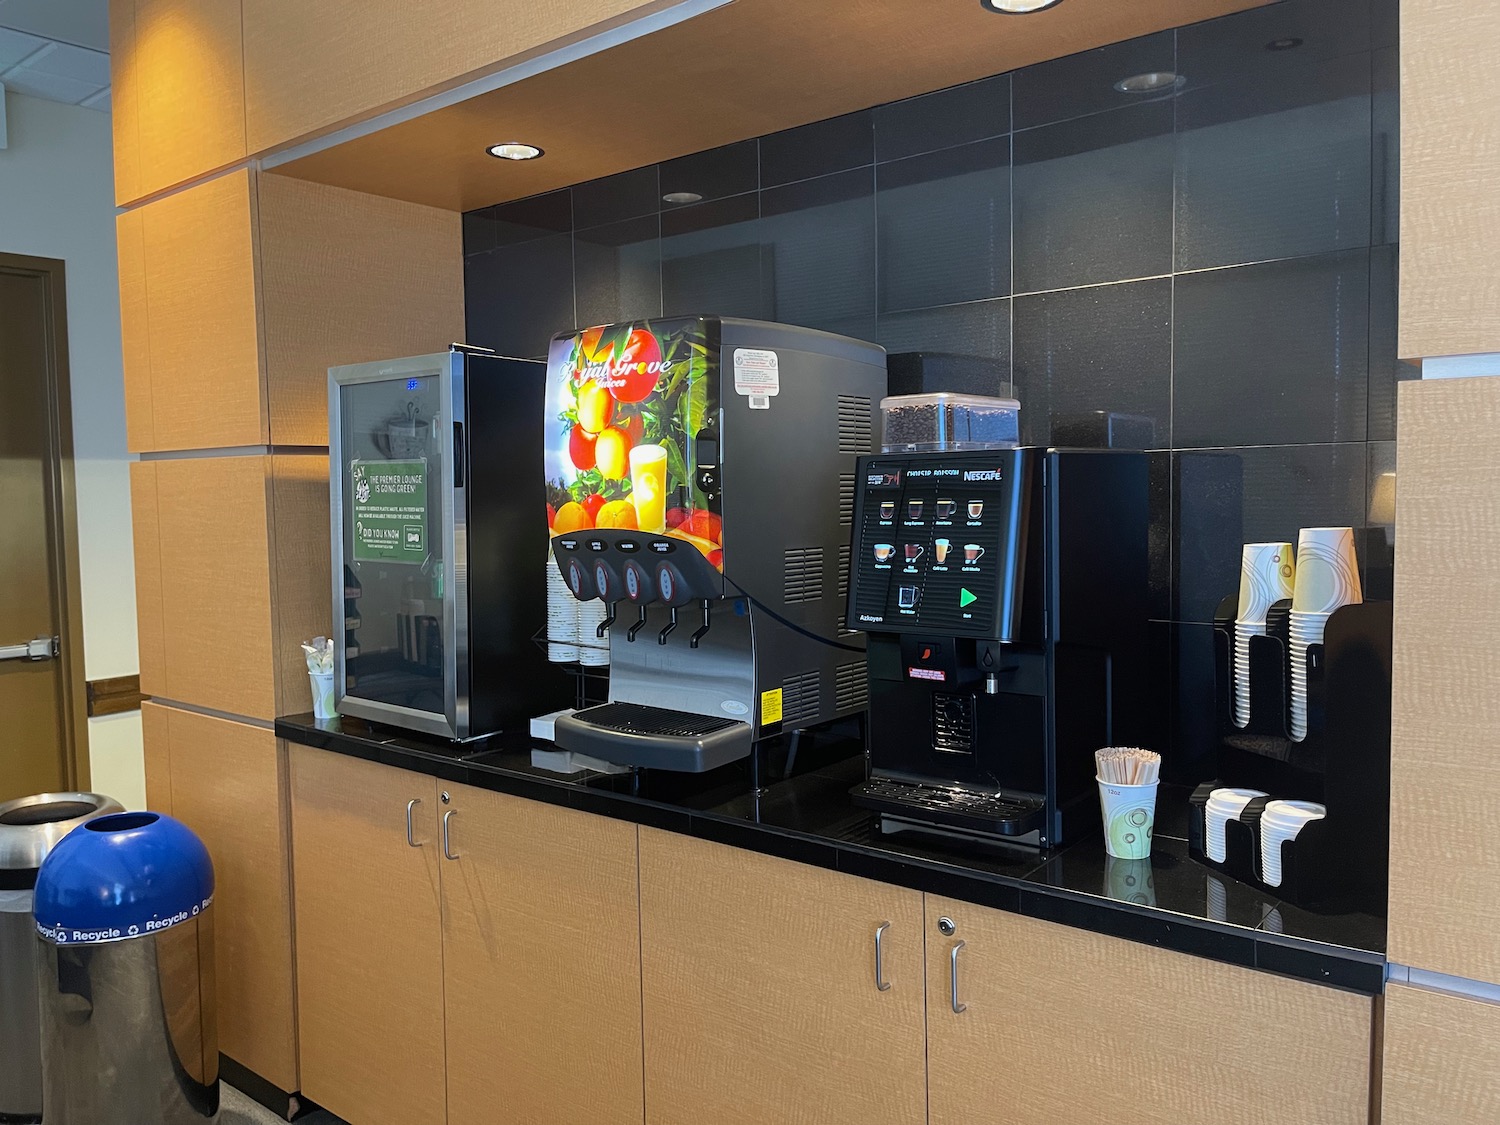 a coffee machine and a beverage dispenser